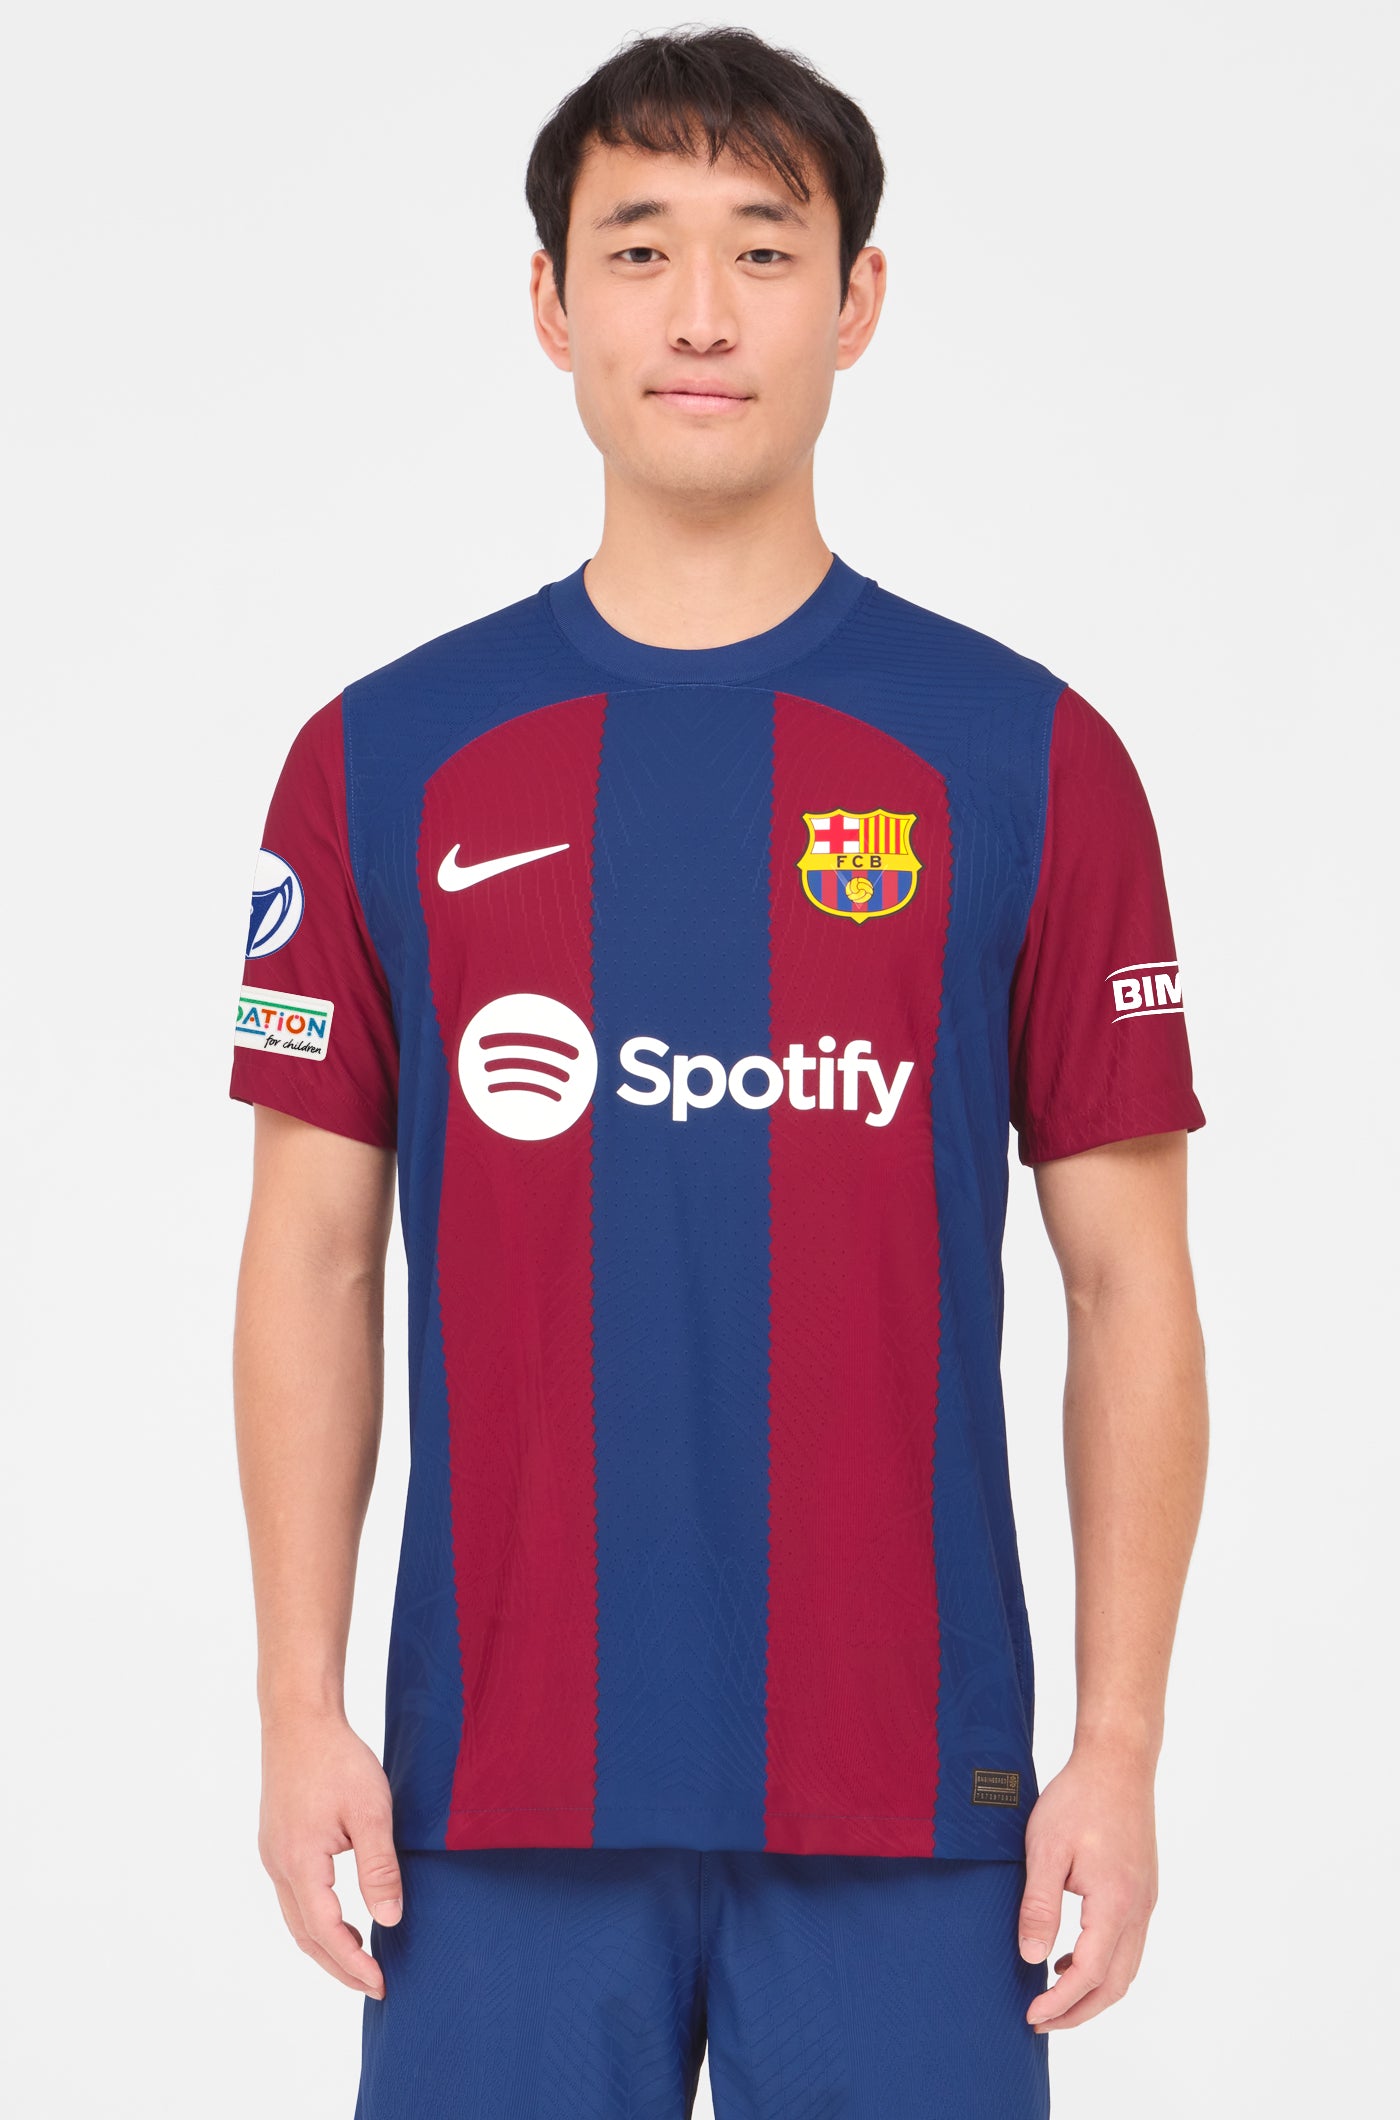 UWCL FC Barcelona home shirt 23/24 Player's Edition  - PINA